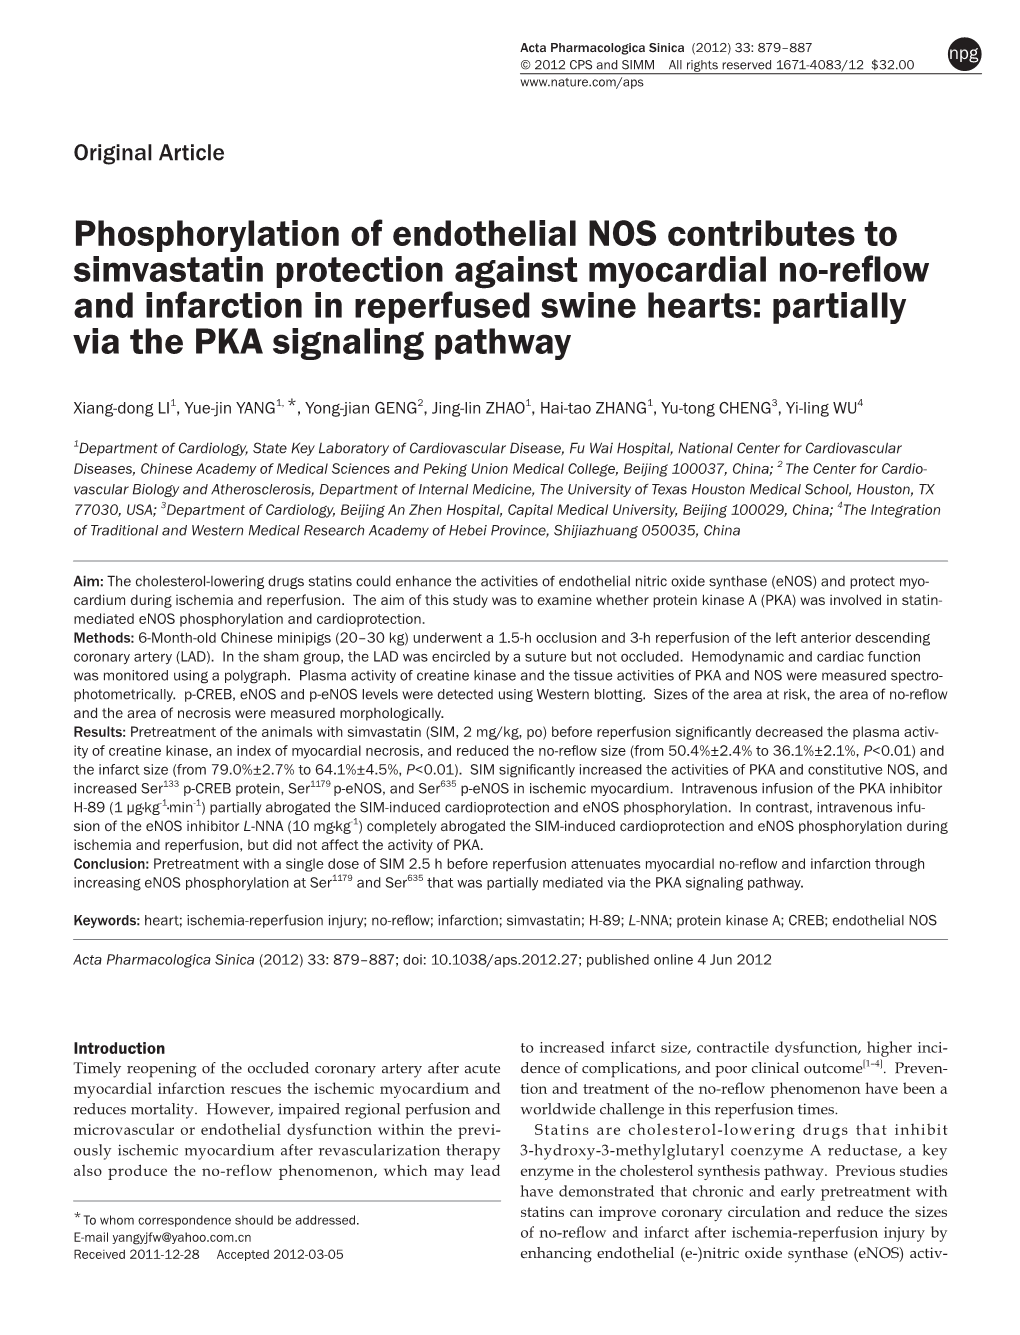 Phosphorylation of Endothelial NOS Contributes to Simvastatin Protection